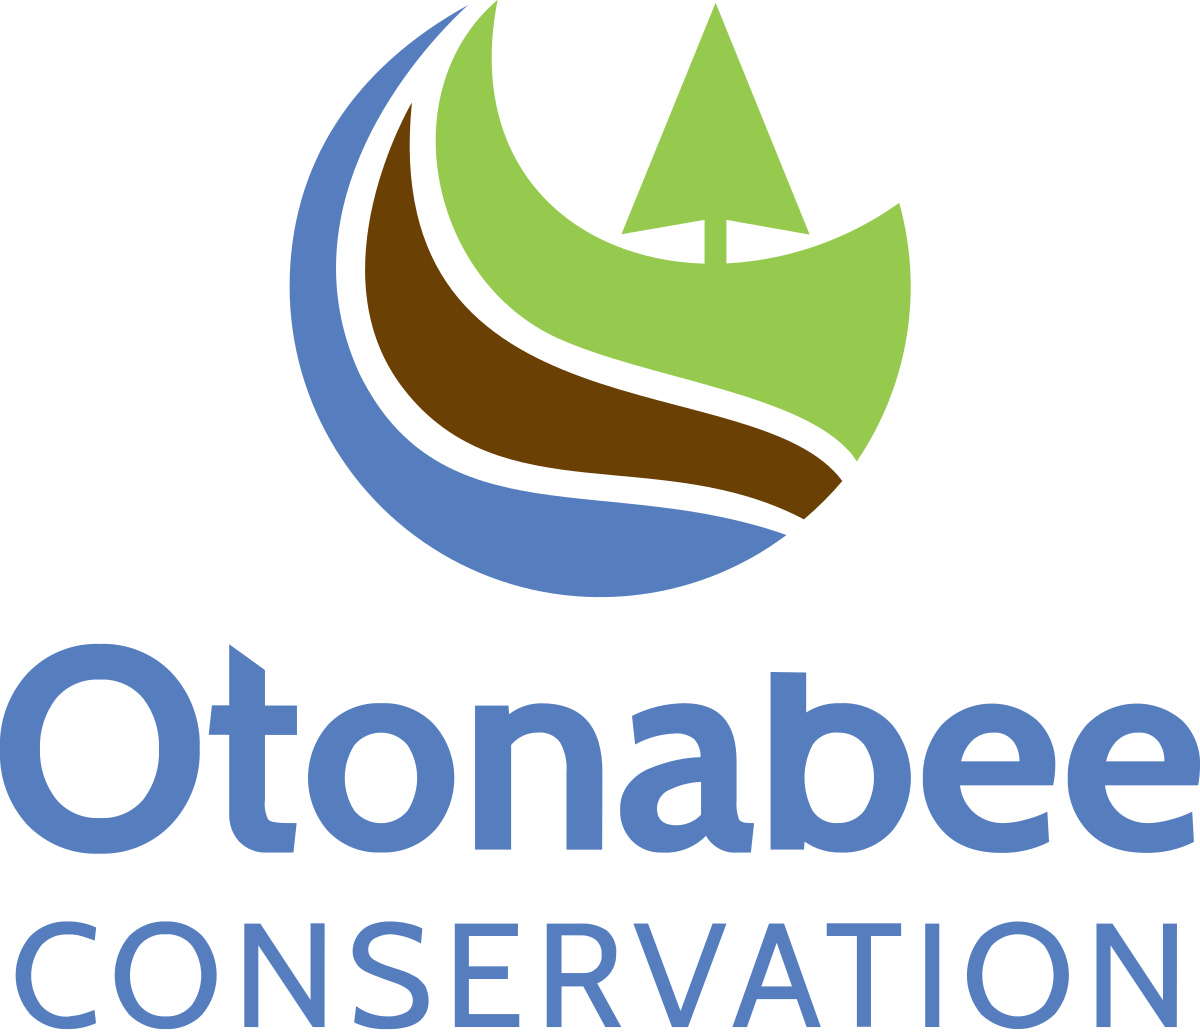 Otonabee Conservation logo, linking to their website